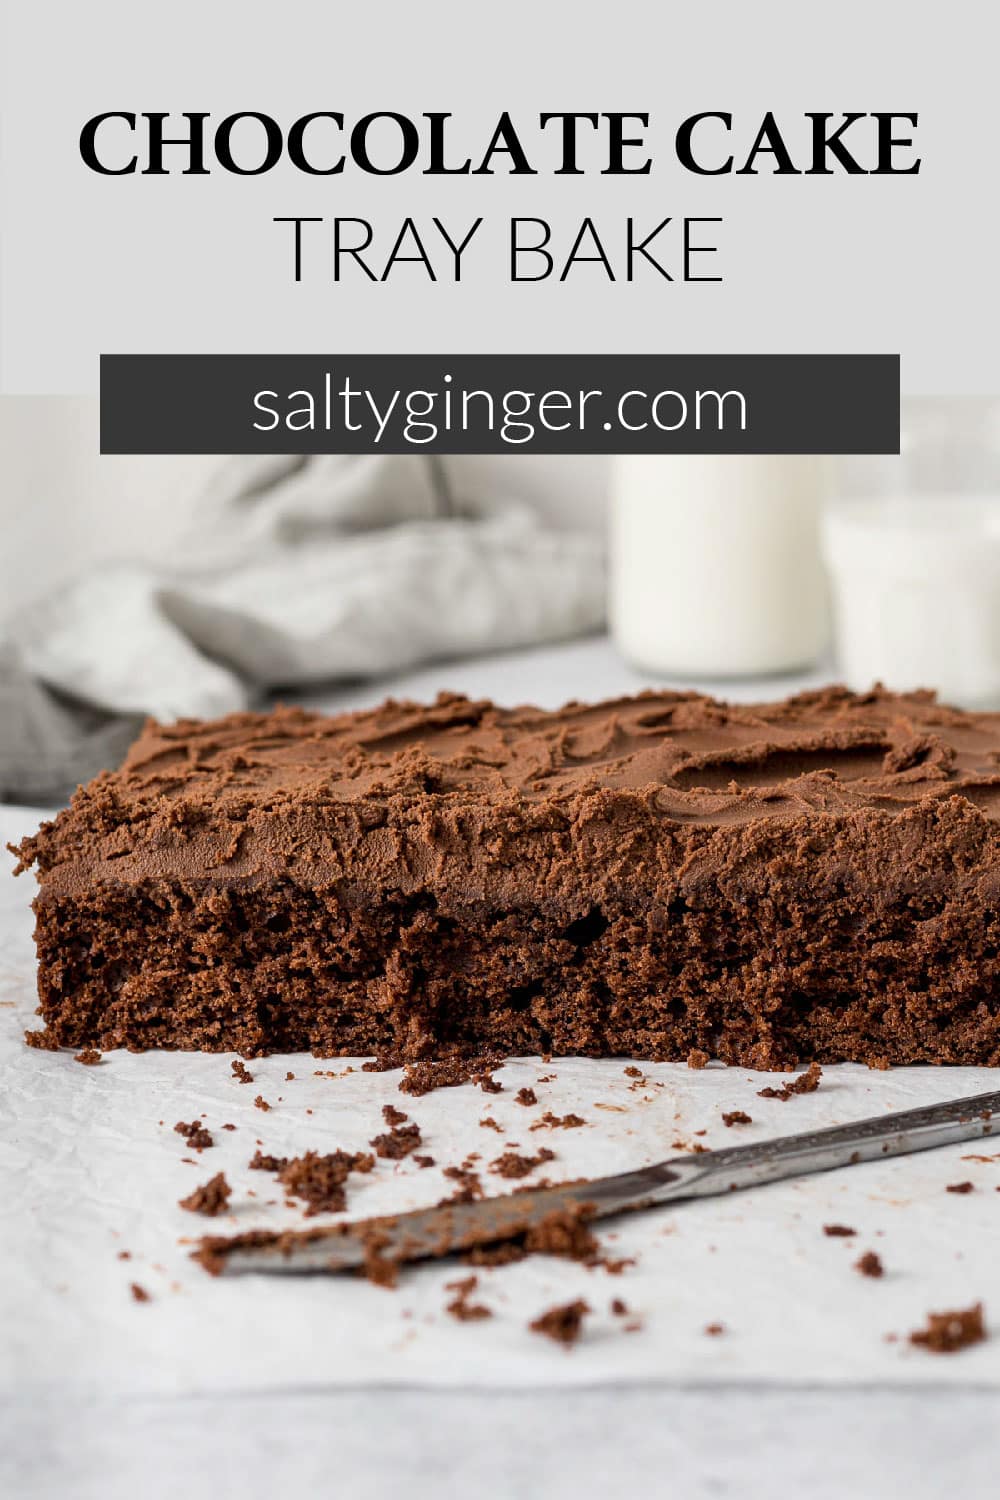 Sliced chocolate tray bake showing milk chocolate ganache.